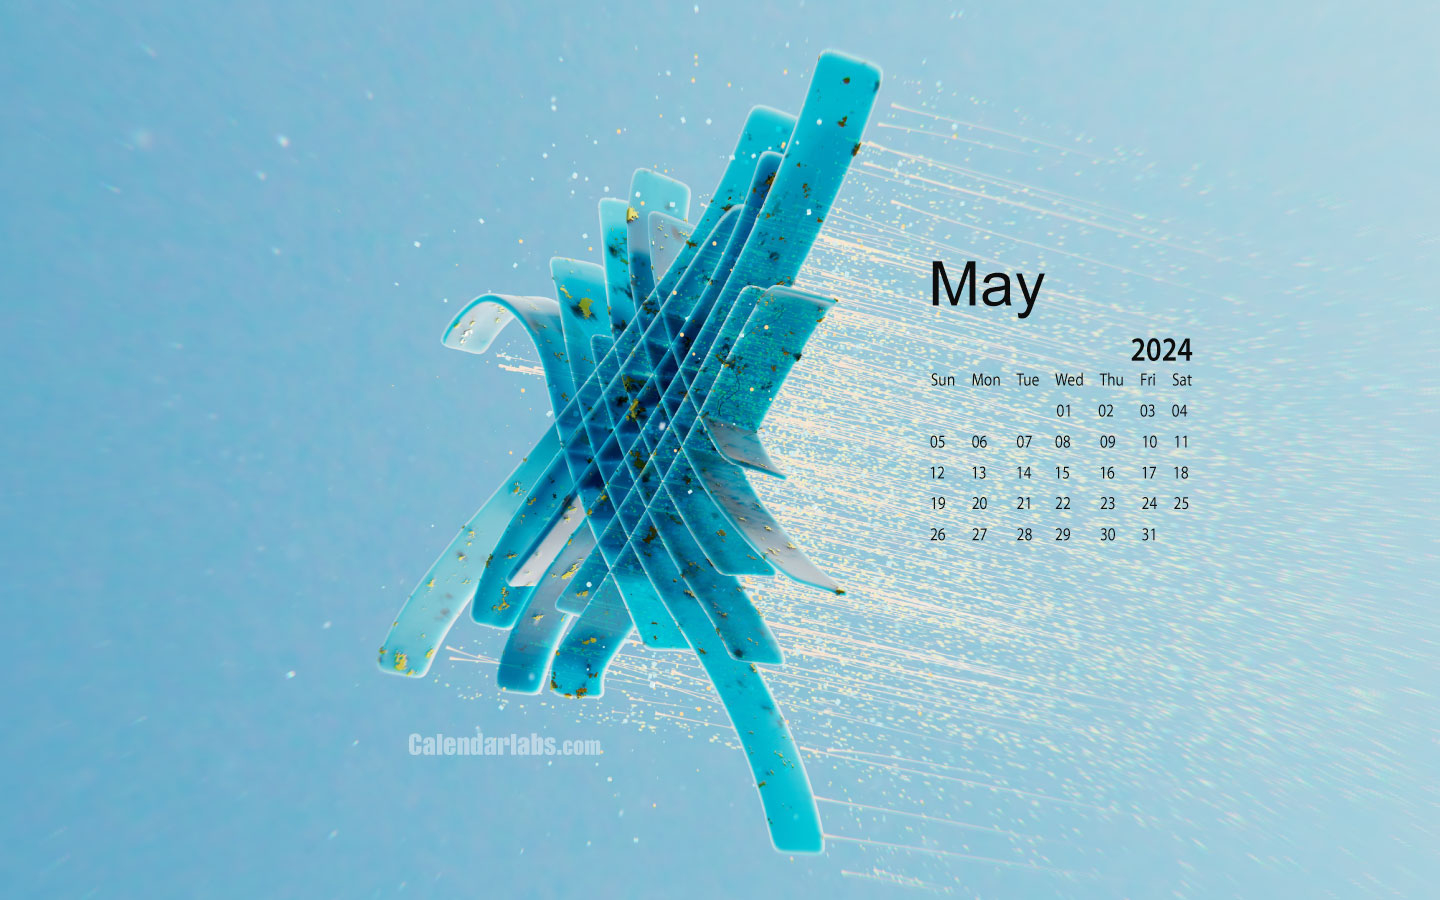 May 2024 Desktop Wallpaper Calendar - Calendarlabs | 2024 Yearly Calendar Calendar Labs